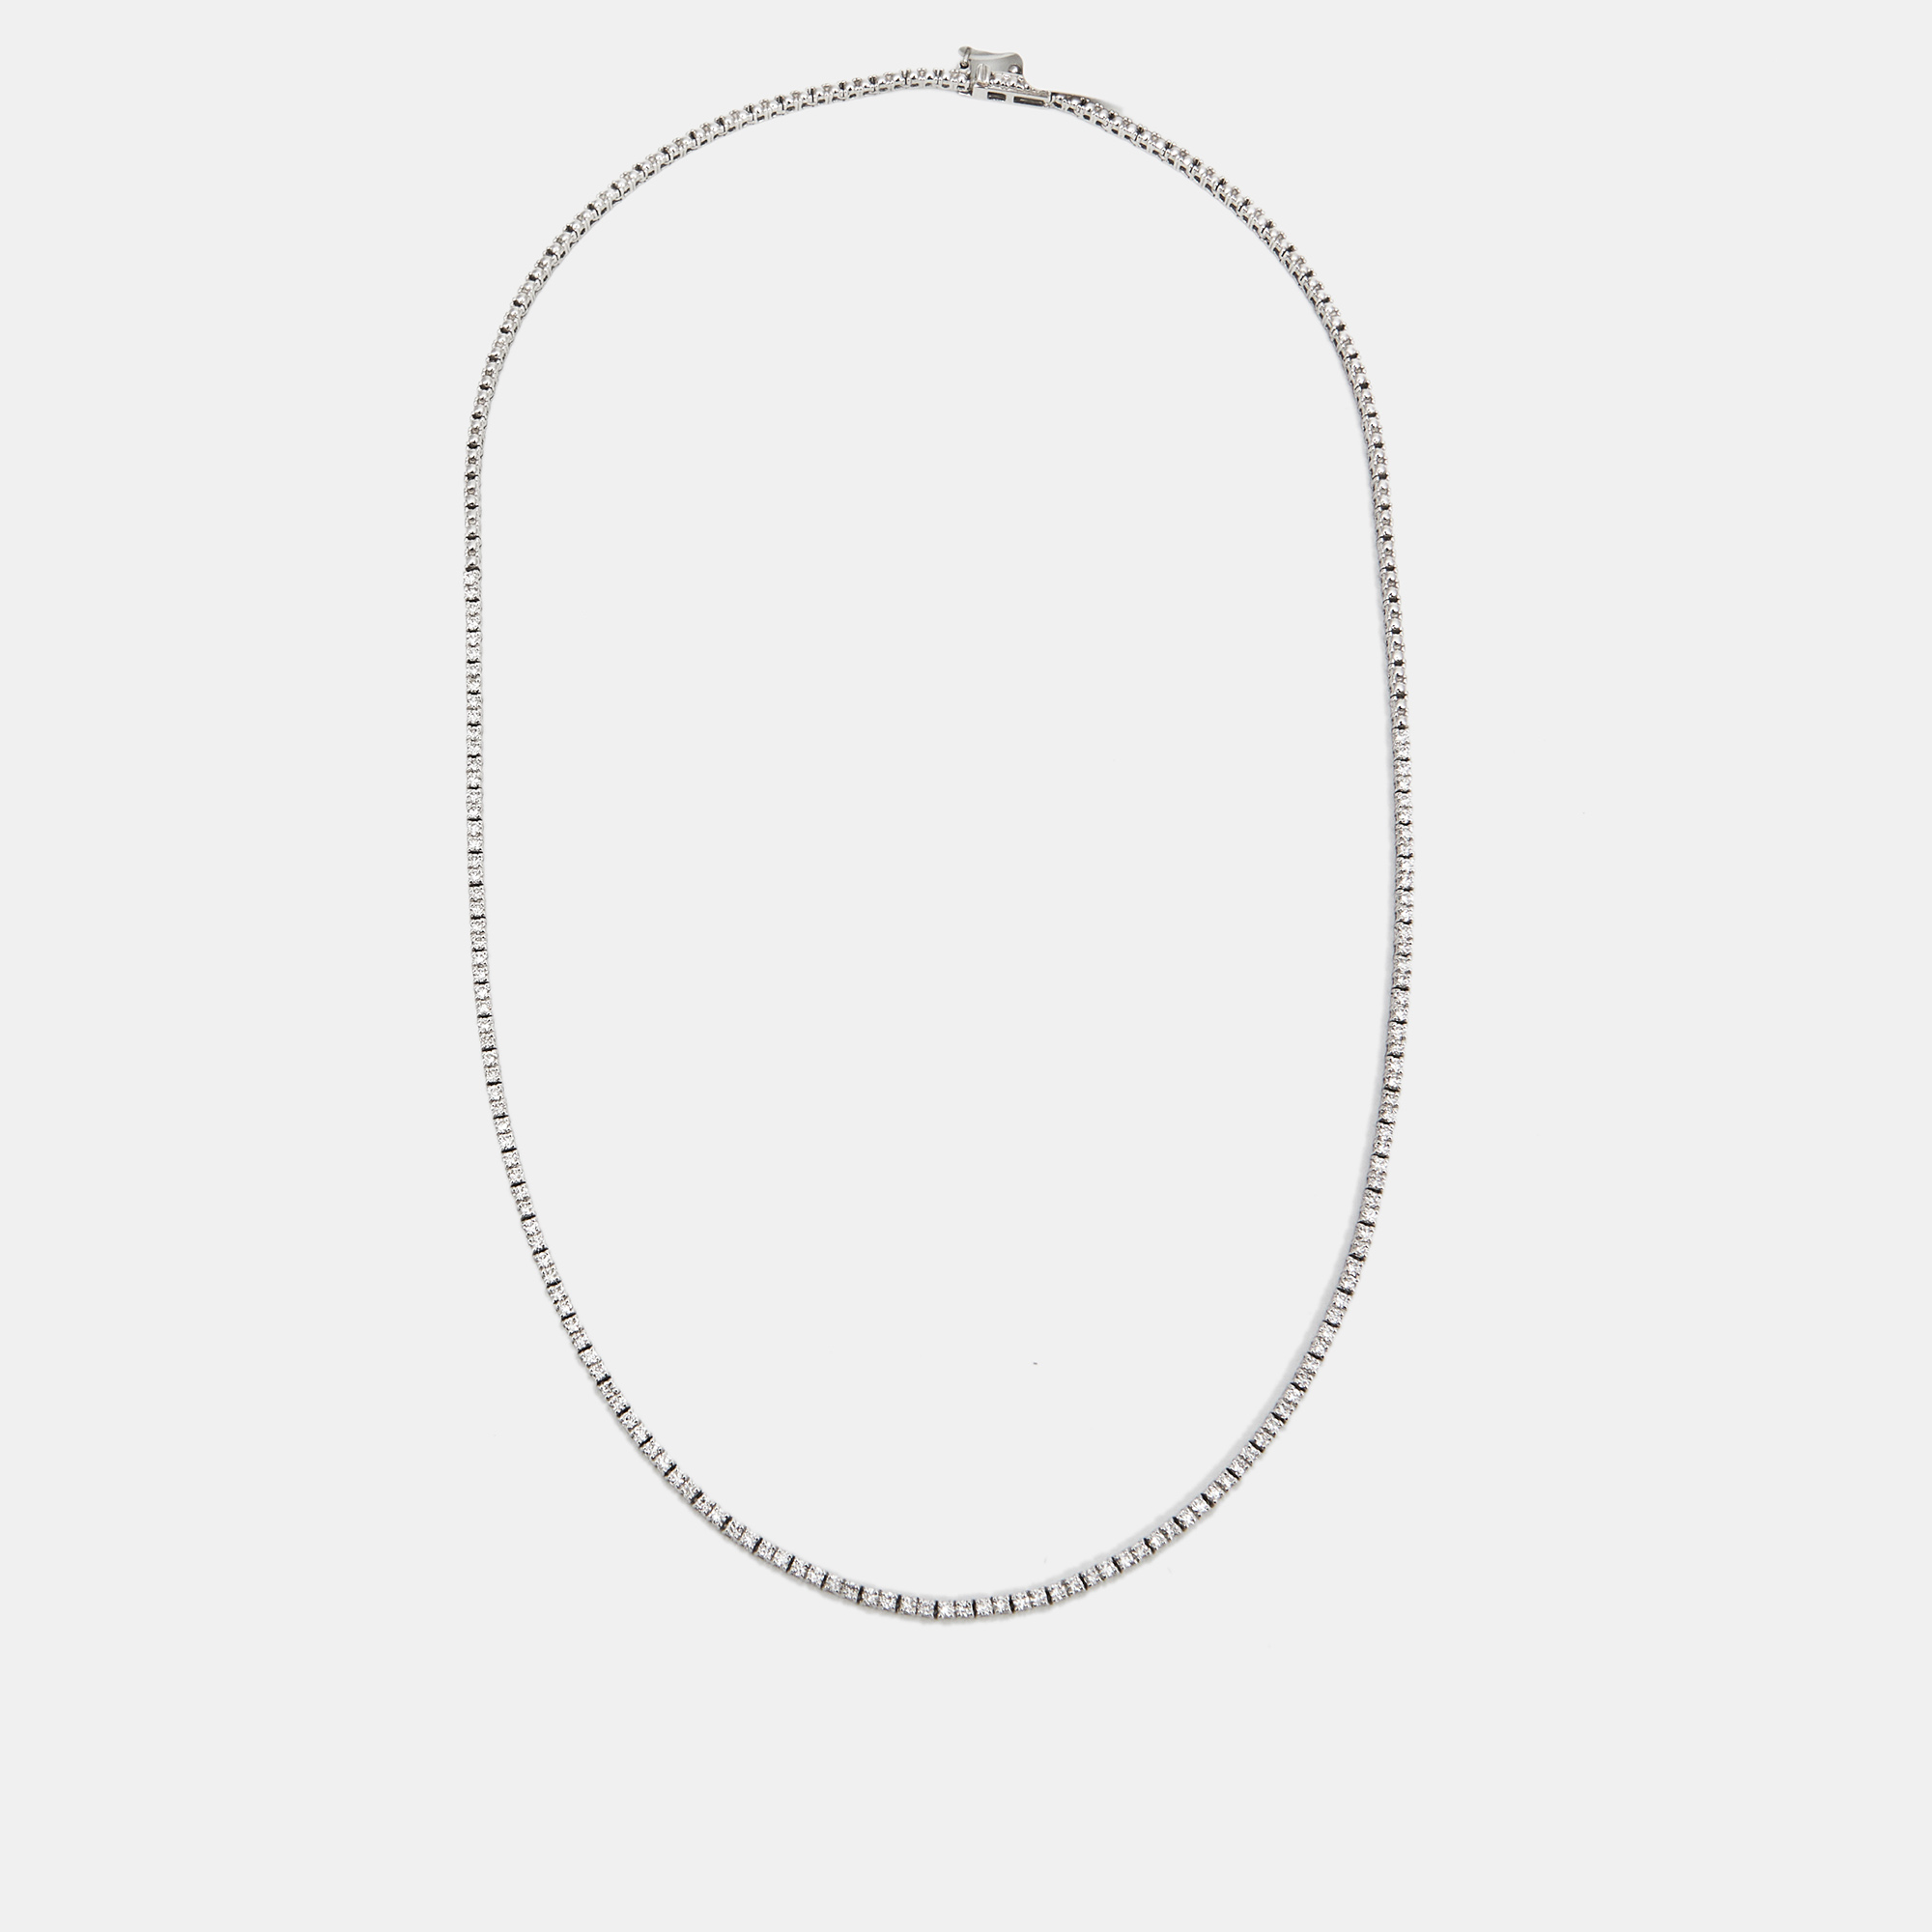 The diamond edit elegant diamond 1.68 cts 18k white gold tennis necklace